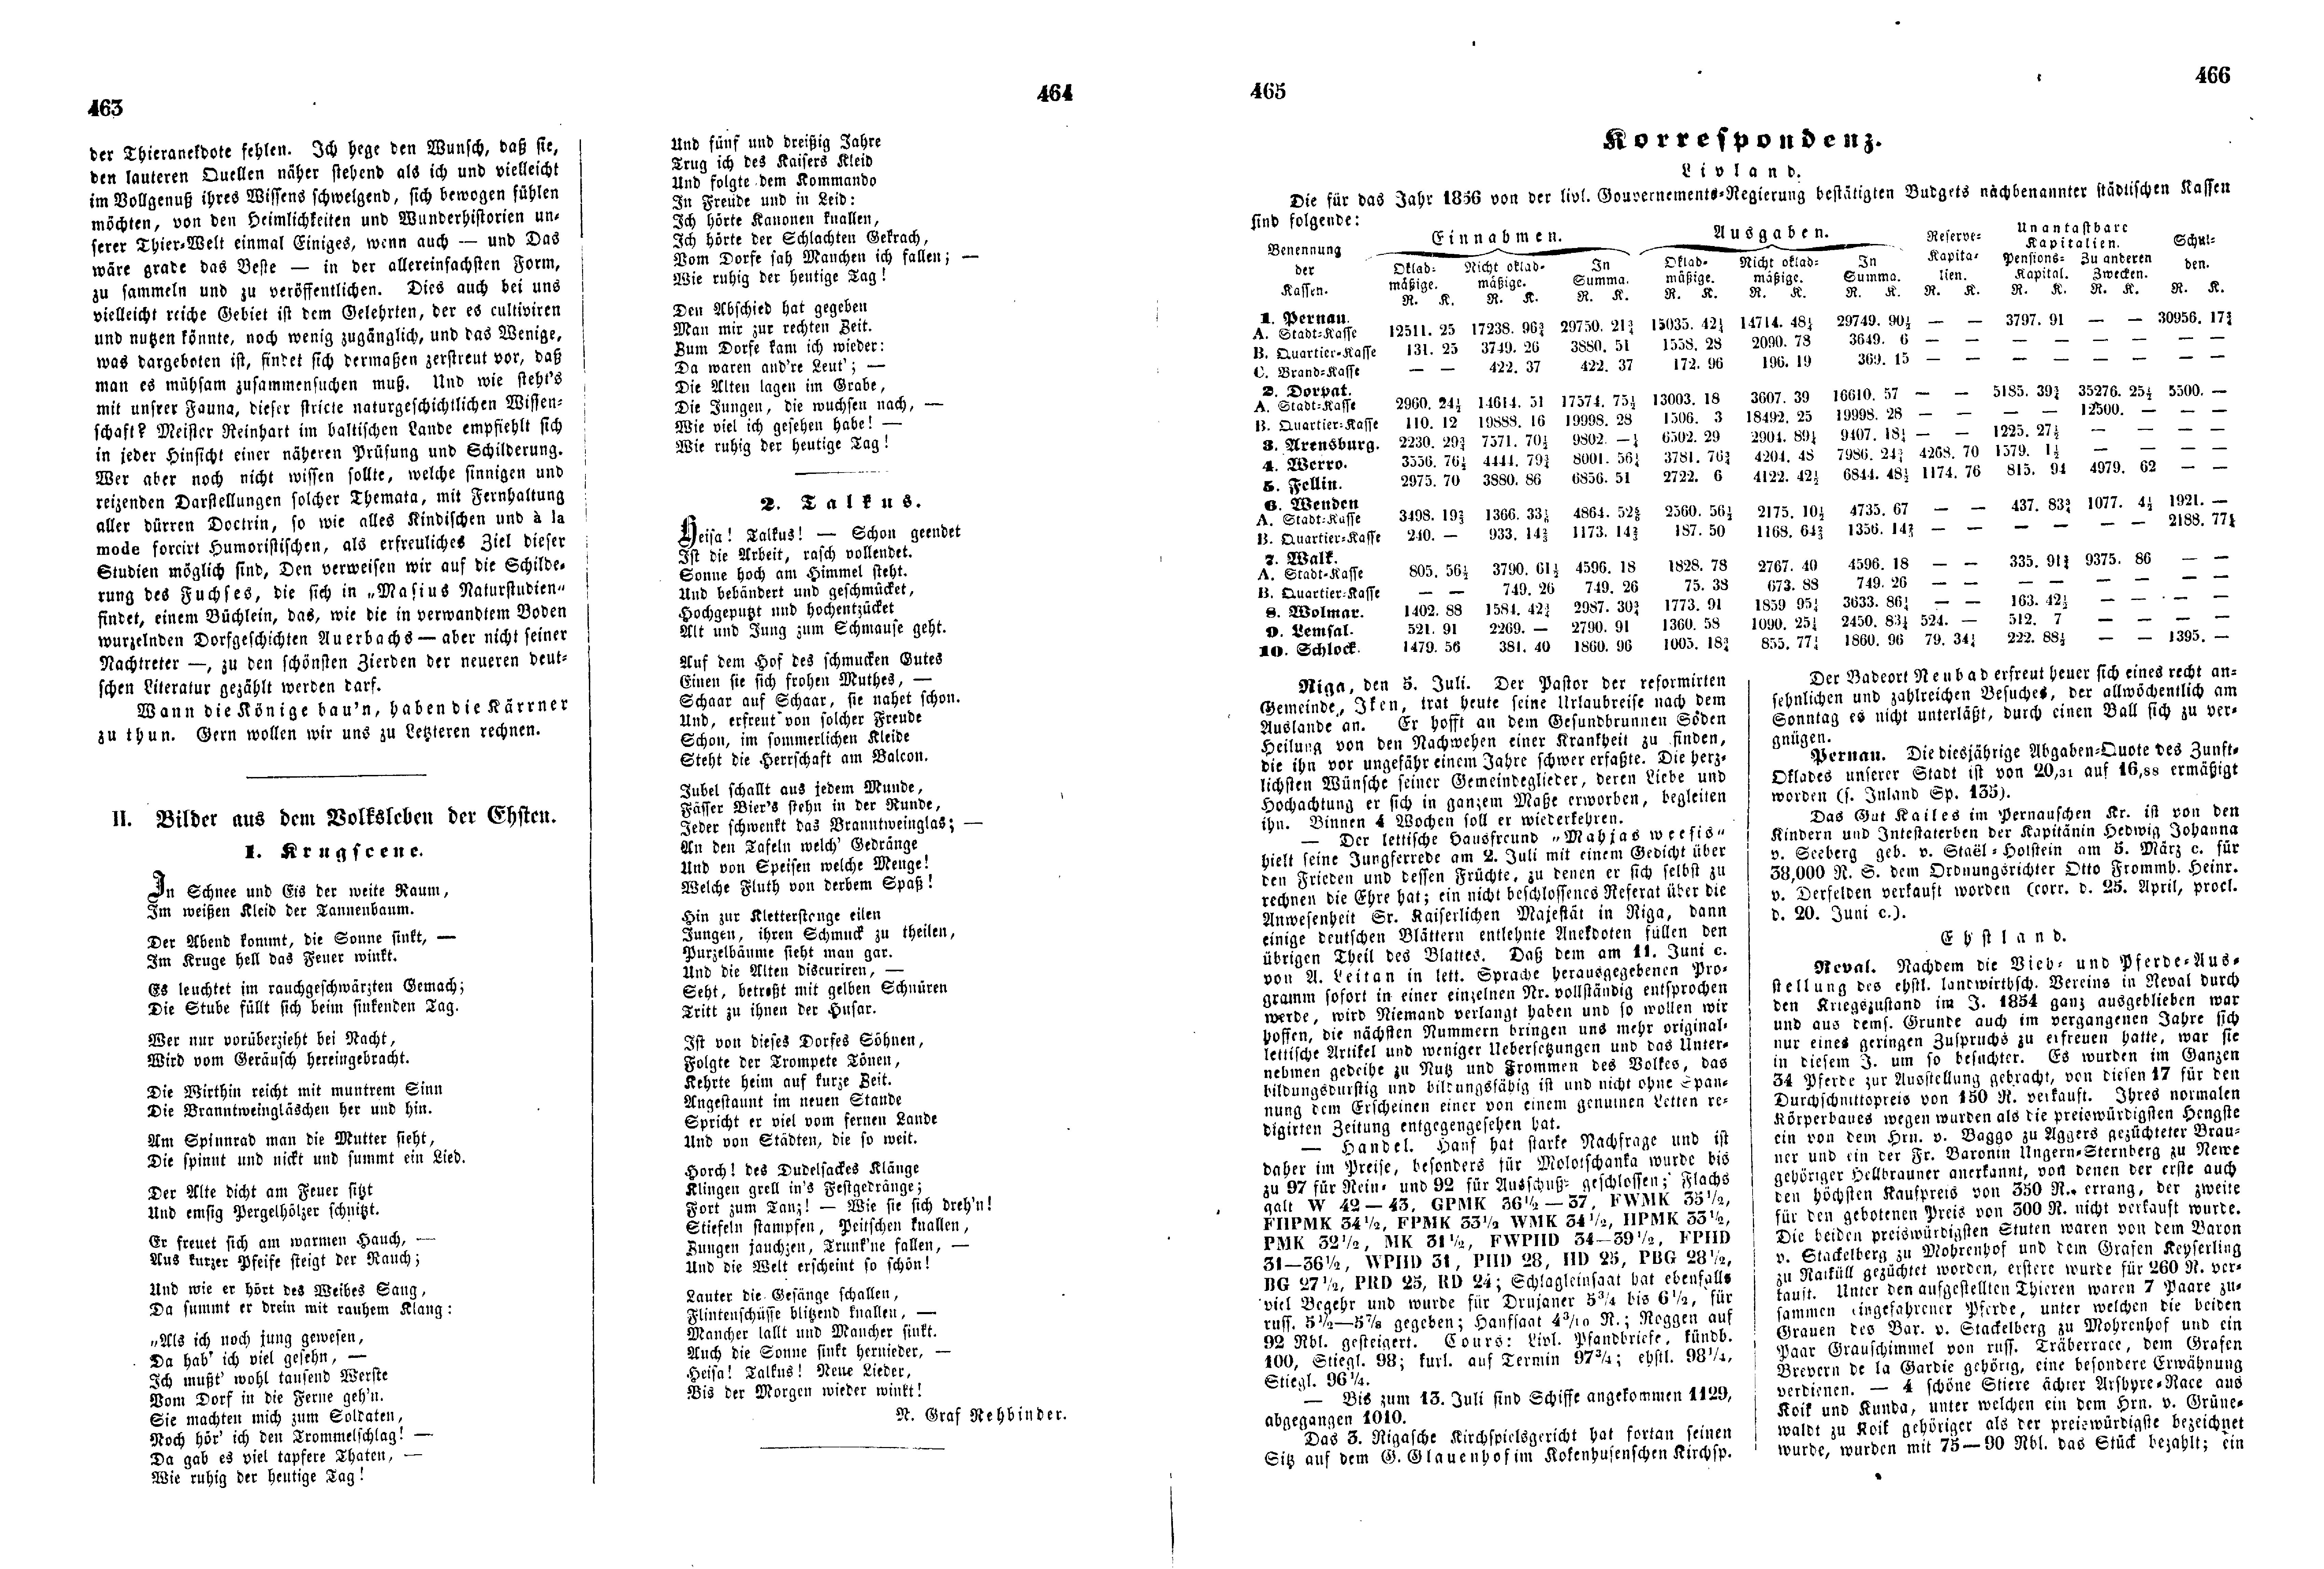 Krugscene (1856) | 1. (463-466) Main body of text